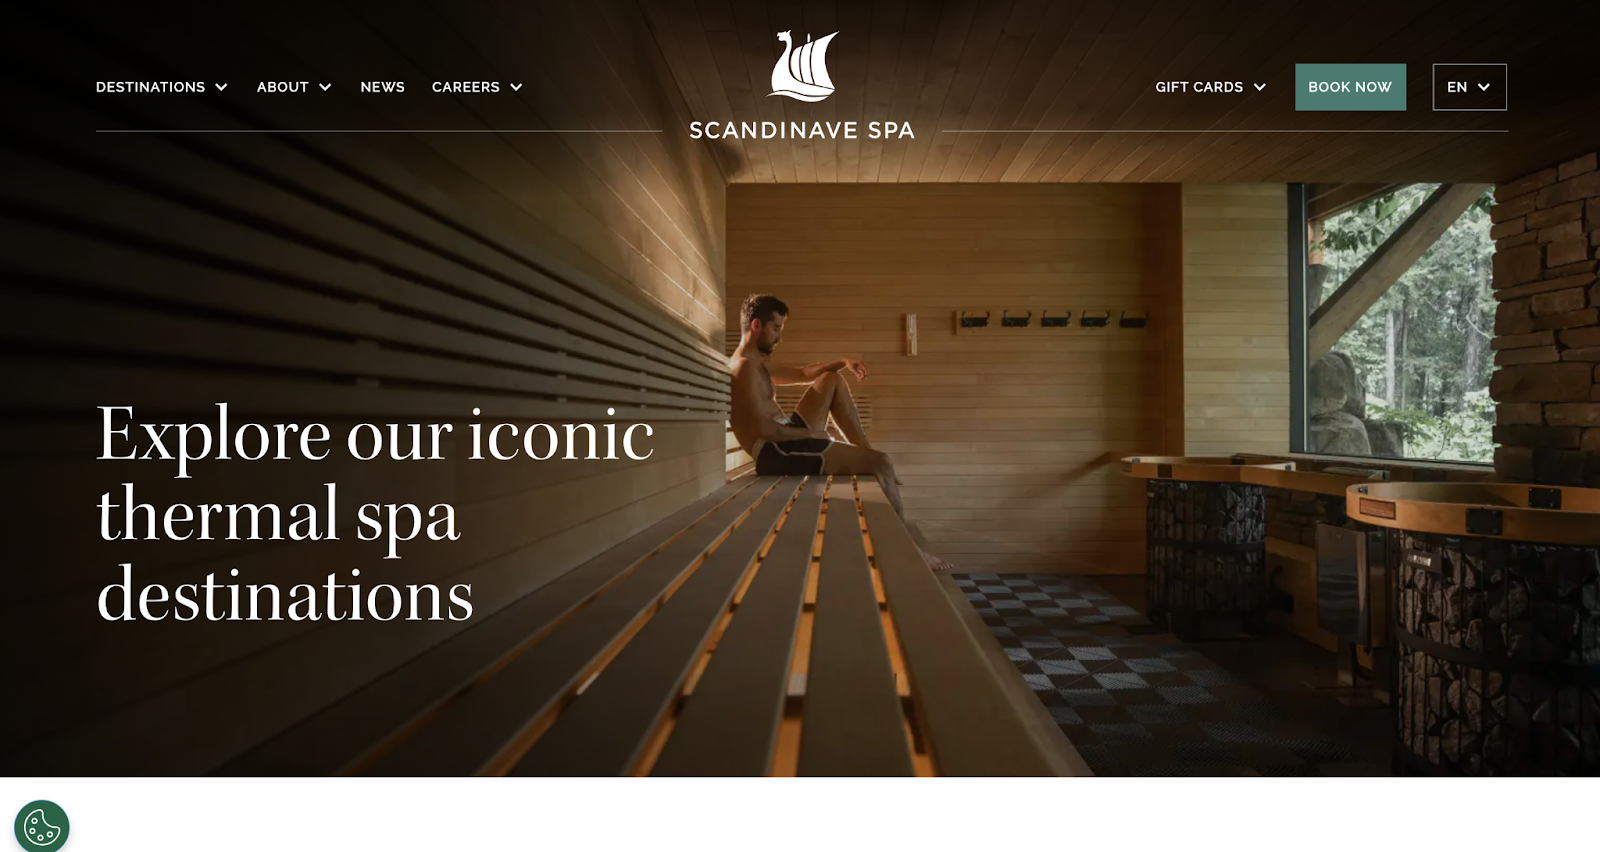 spa website examples, scandinave spa